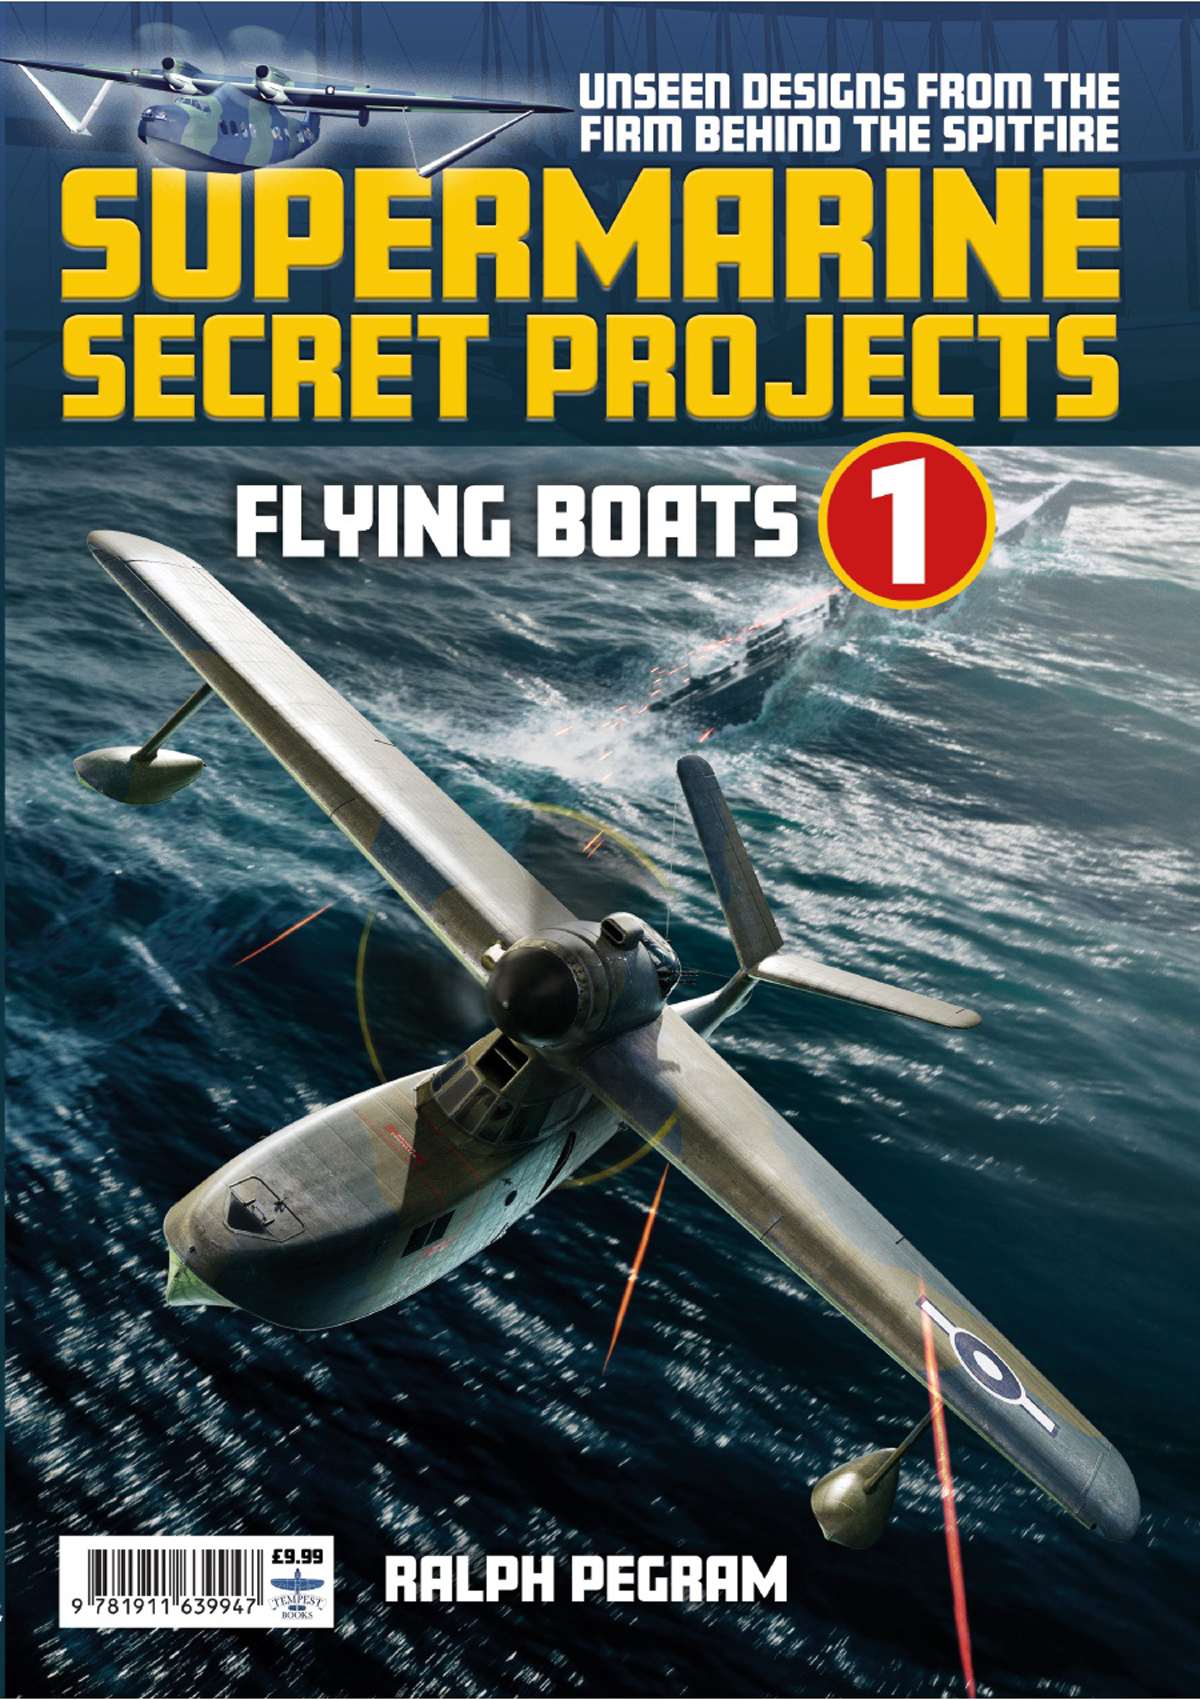 Supermarine Secret Projects Vol. 1 - Seaplanes and Floatplanes - Bookazine